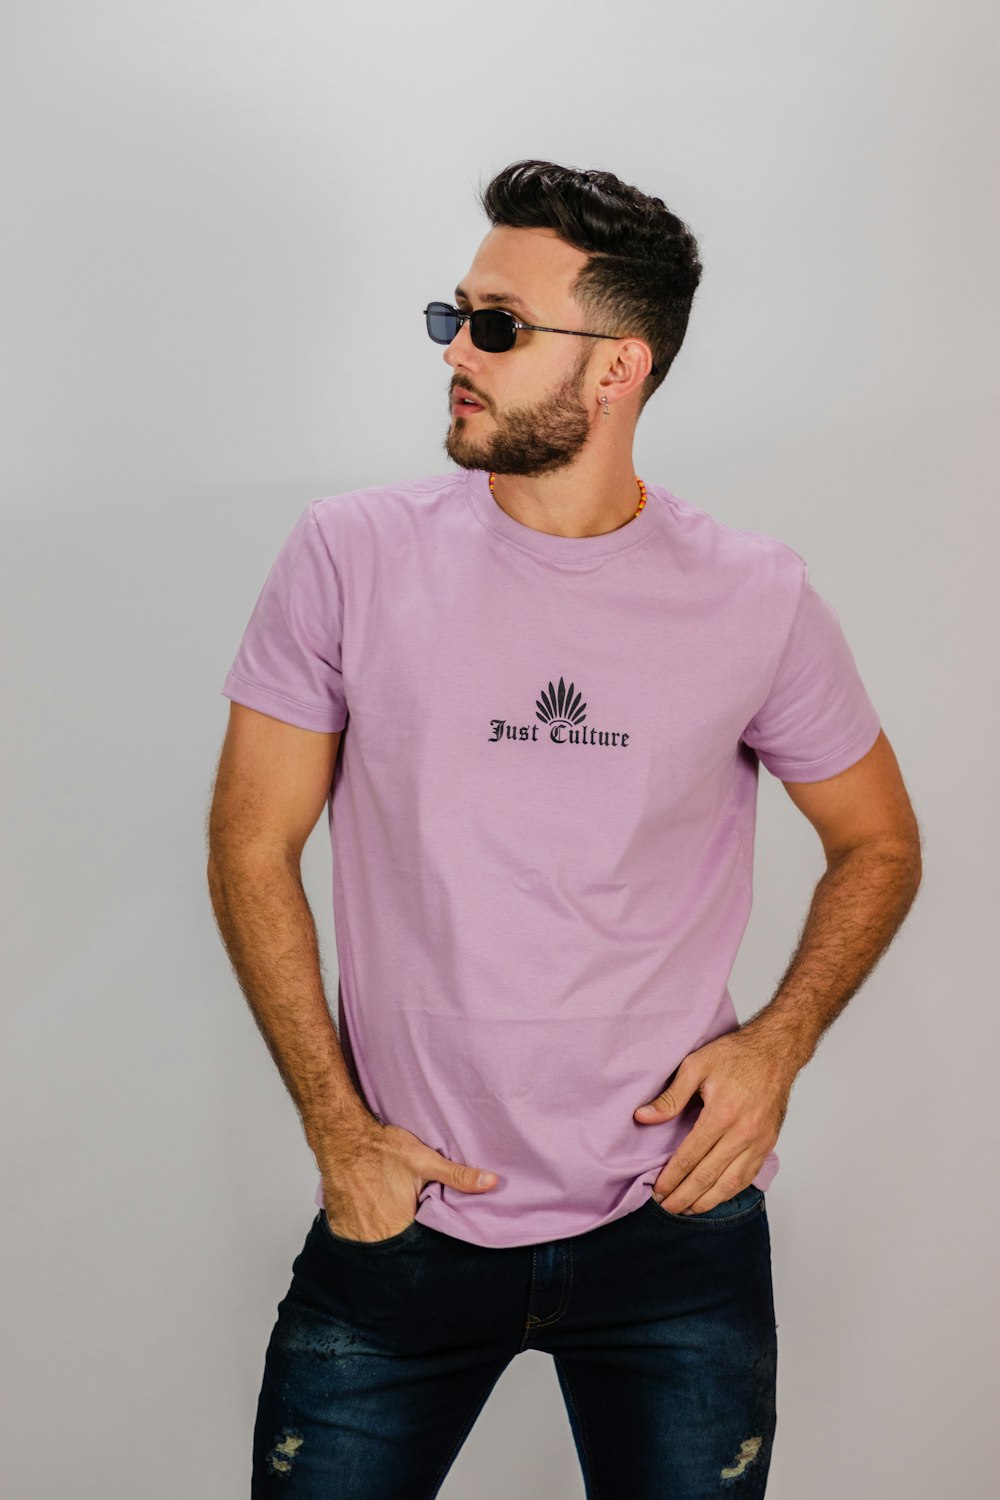 man in pink crew neck t-shirt wearing black sunglasses